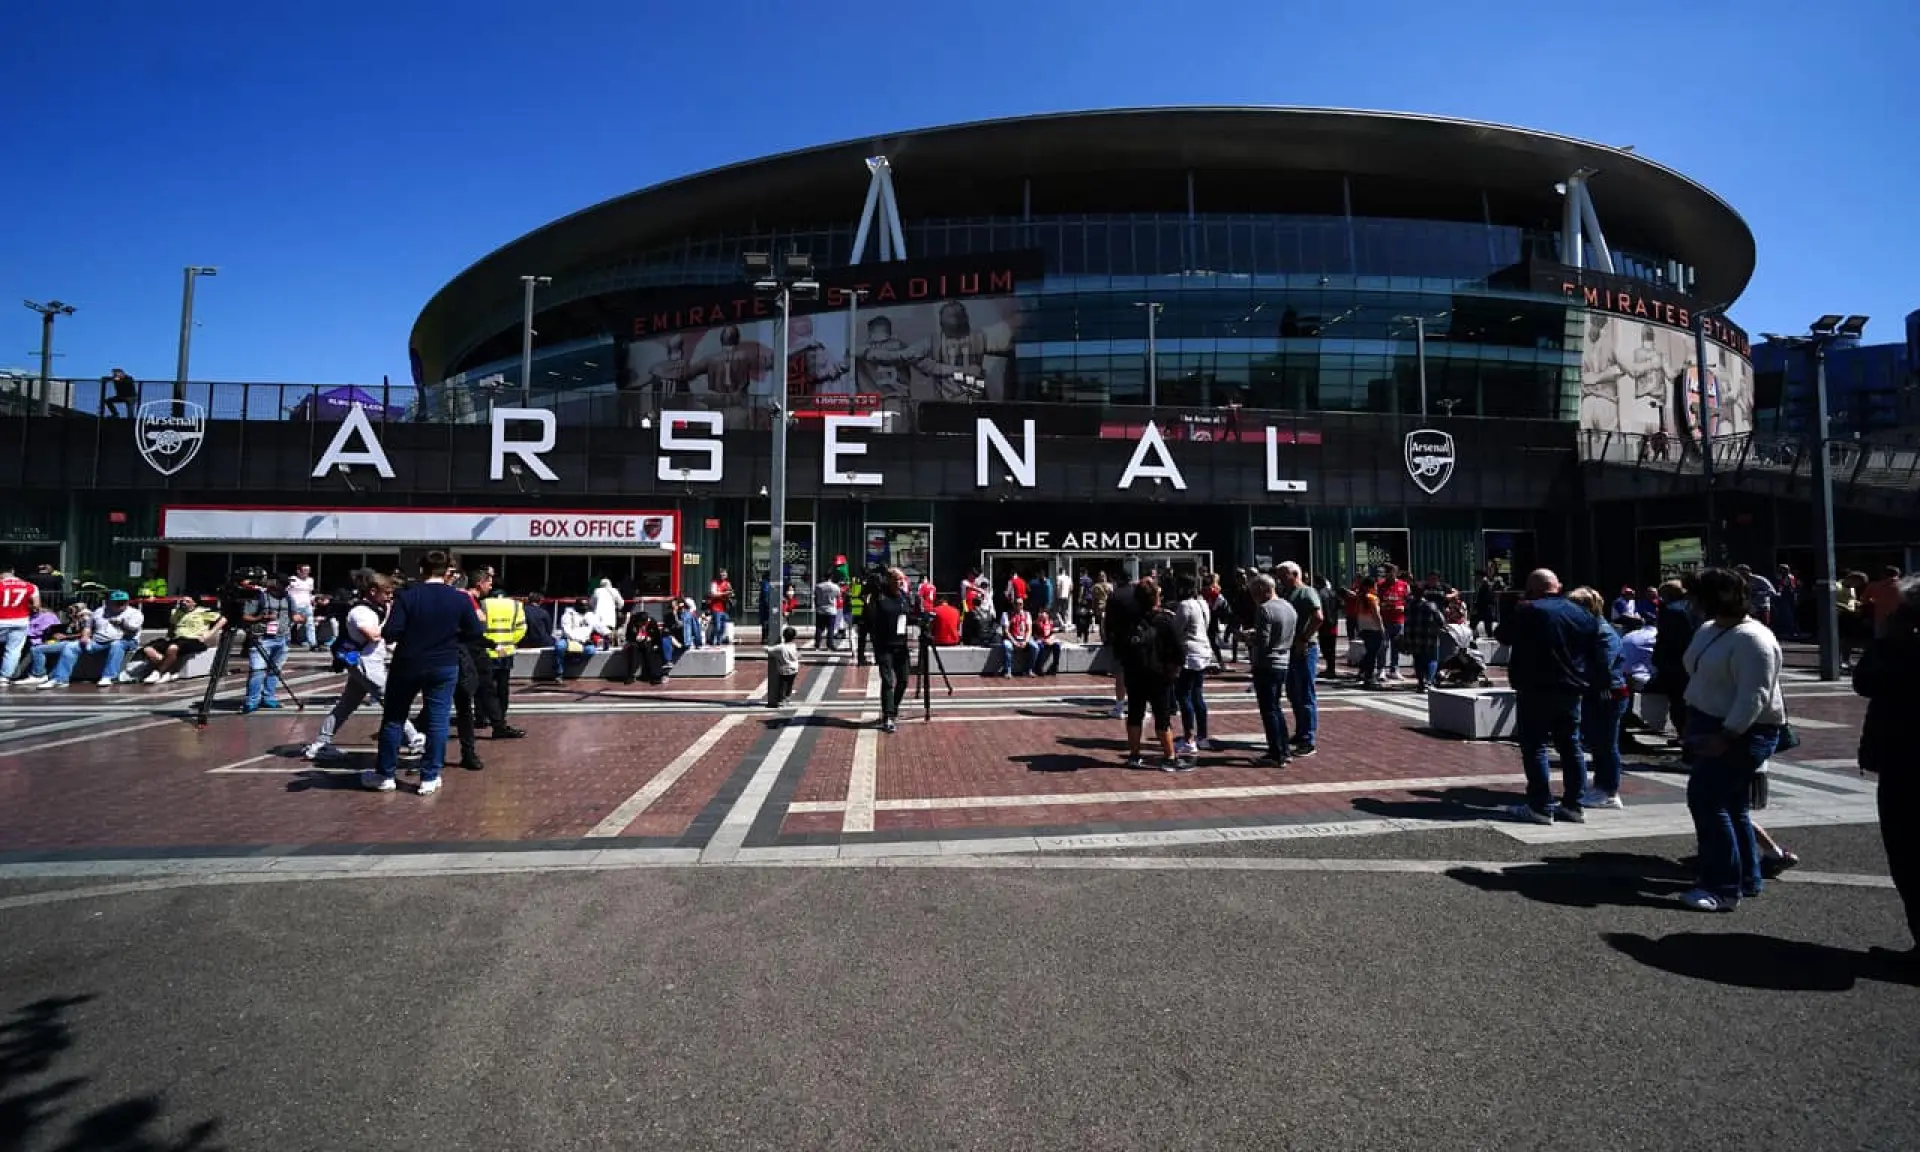 Emirates Stadium, Tottenham v Arsenal betting tips